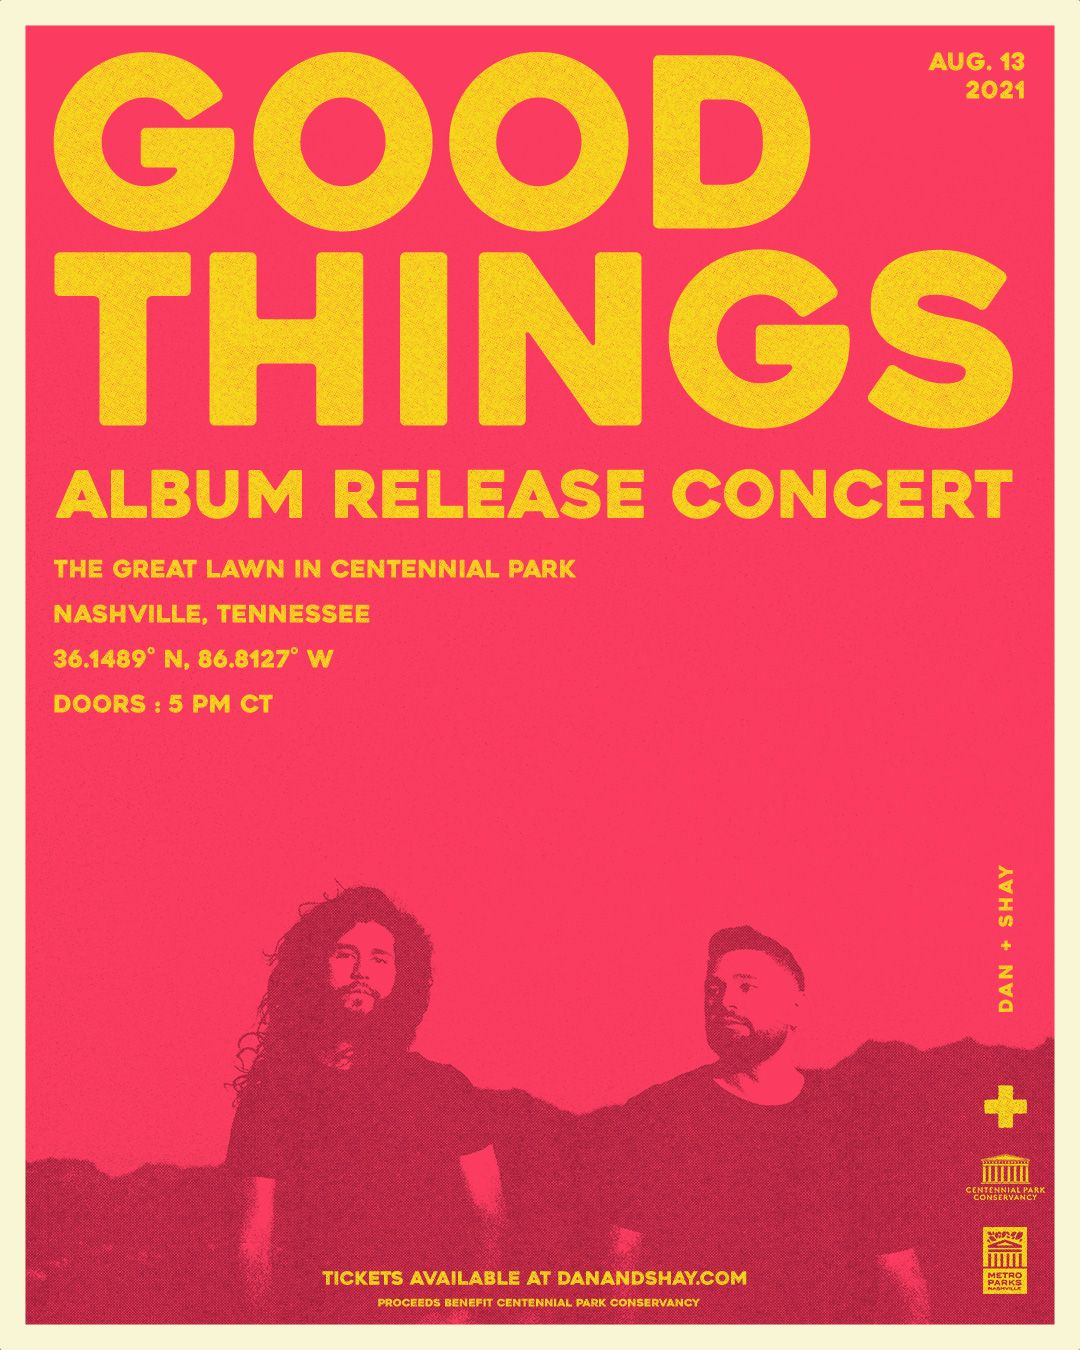 DAN + SHAY ANNOUNCE "GOOD THINGS" ALBUM RELEASE CONCERT AUG. 13